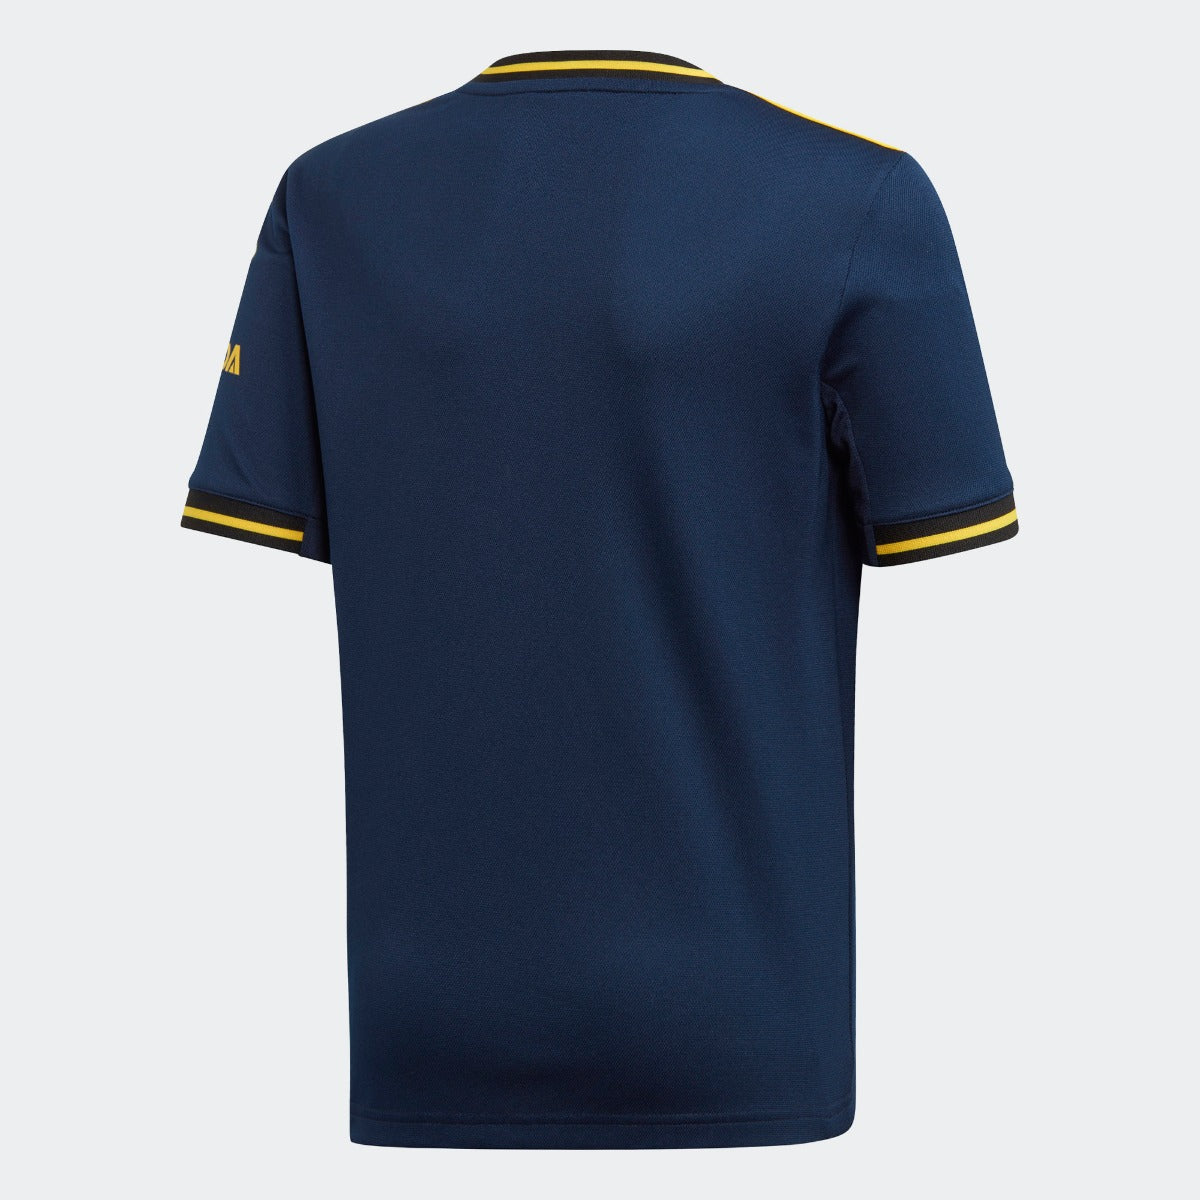 Adidas 2019-20 Arsenal YOUTH Third Jersey - Navy-Yellow